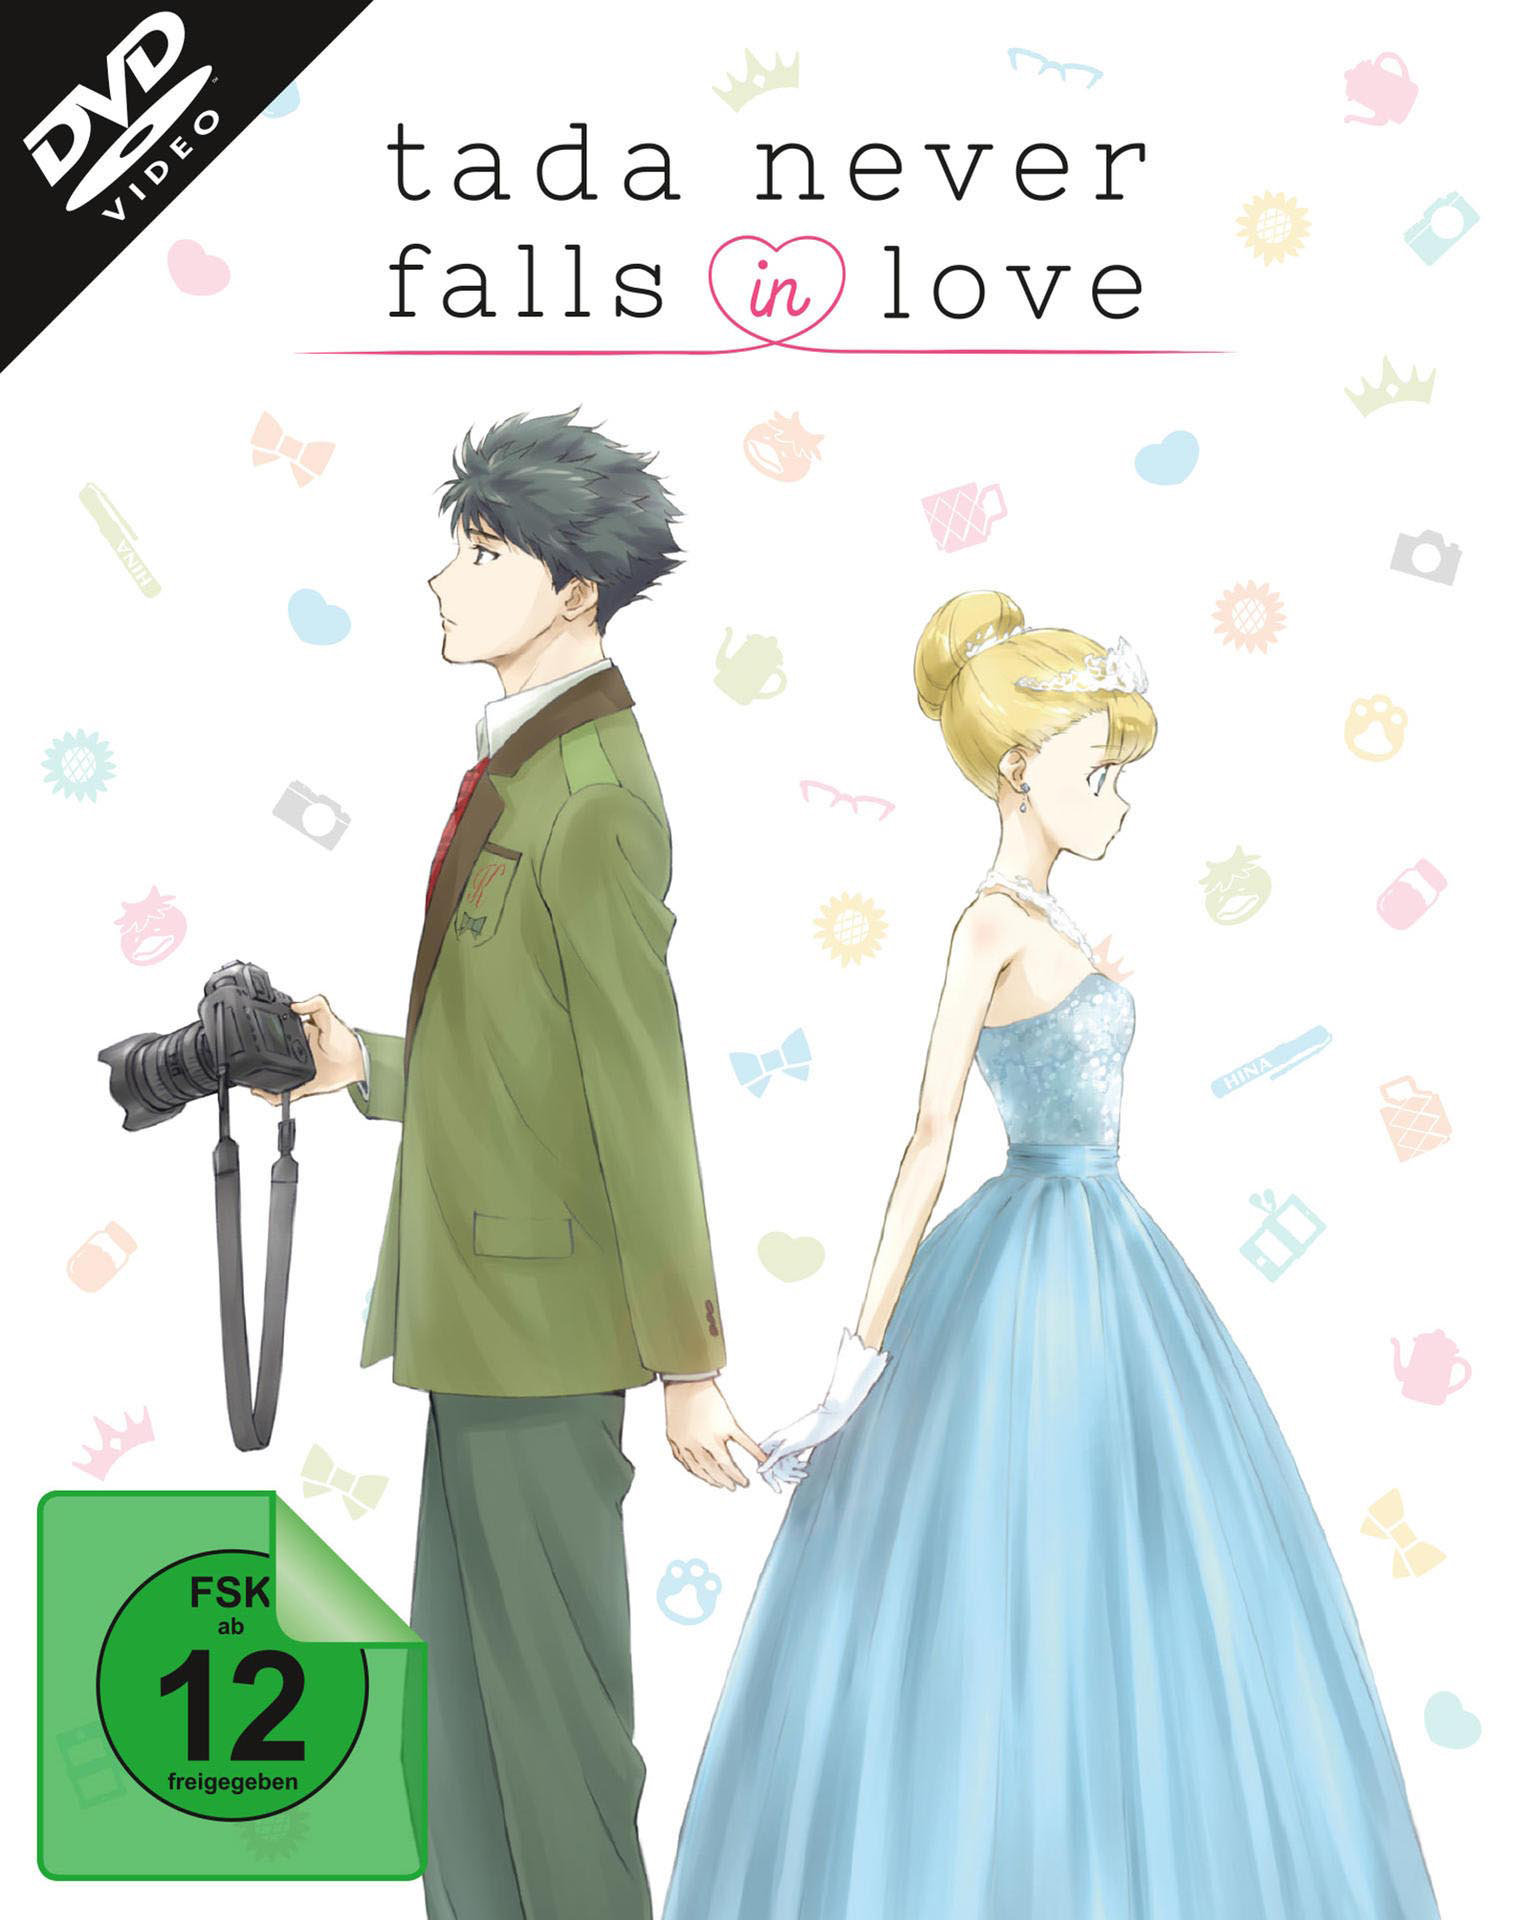 Love DVD in 1 Tada Falls Never Vol. (Ep.1-4)